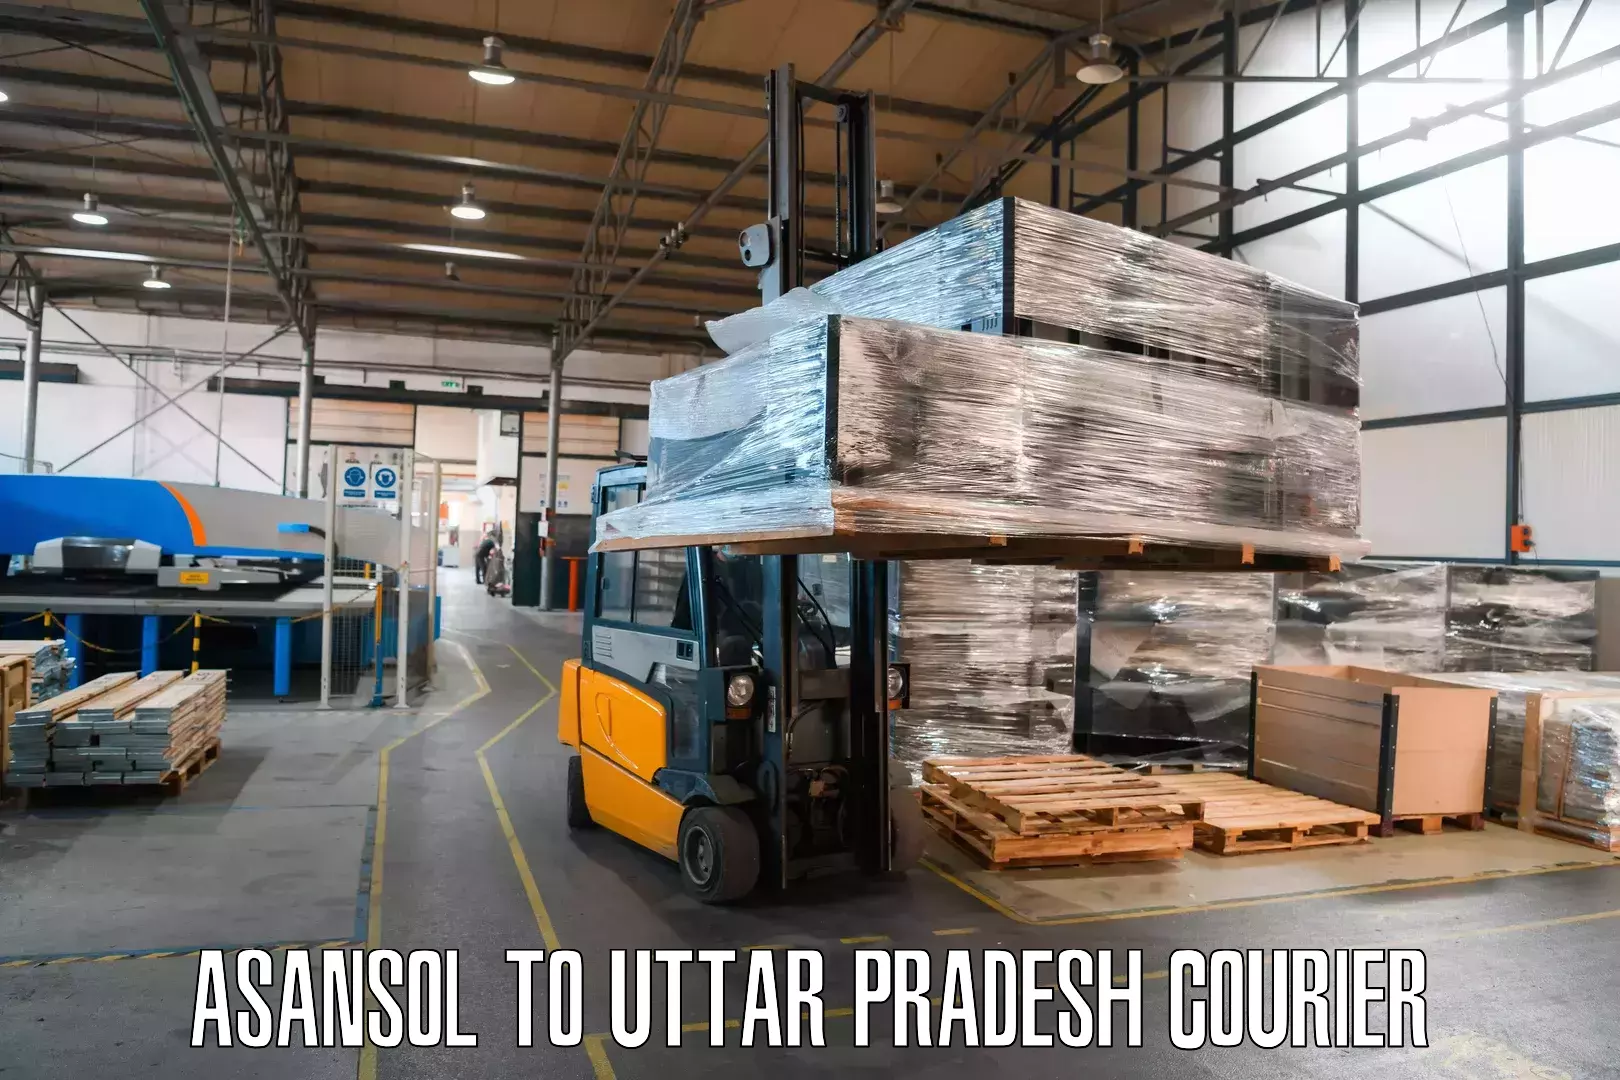 Digital courier platforms Asansol to Jalesar